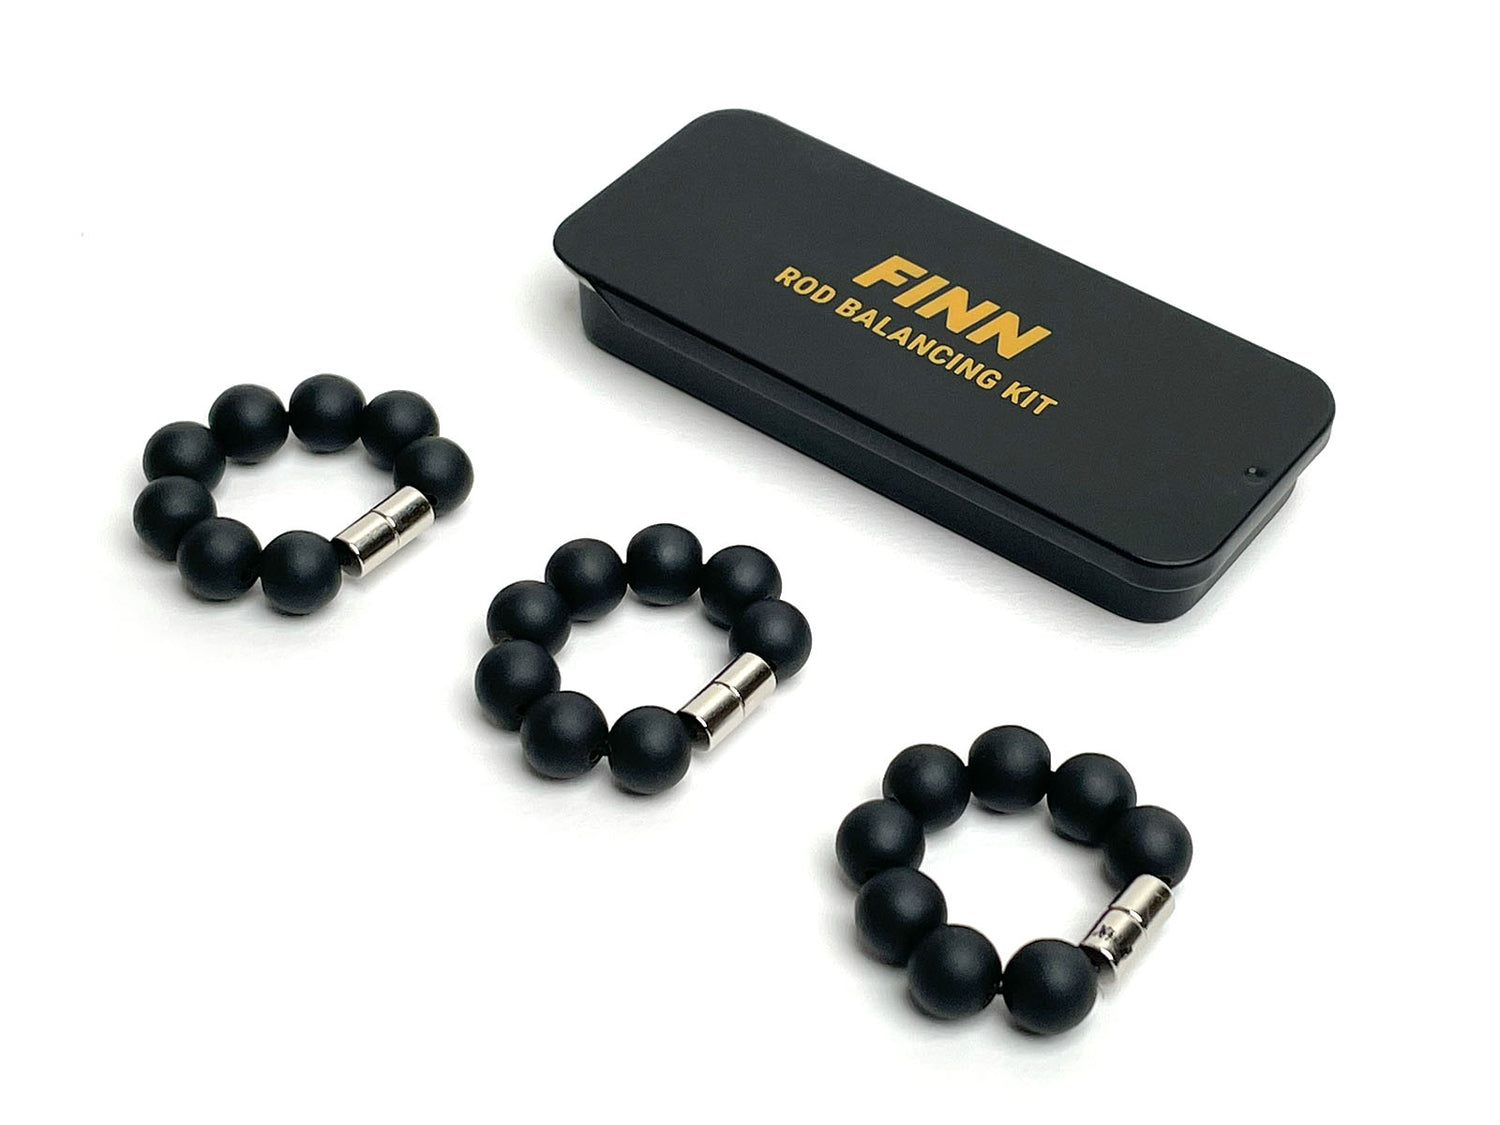 FINN Rod Balancing Kit - 3 Pack Product Image